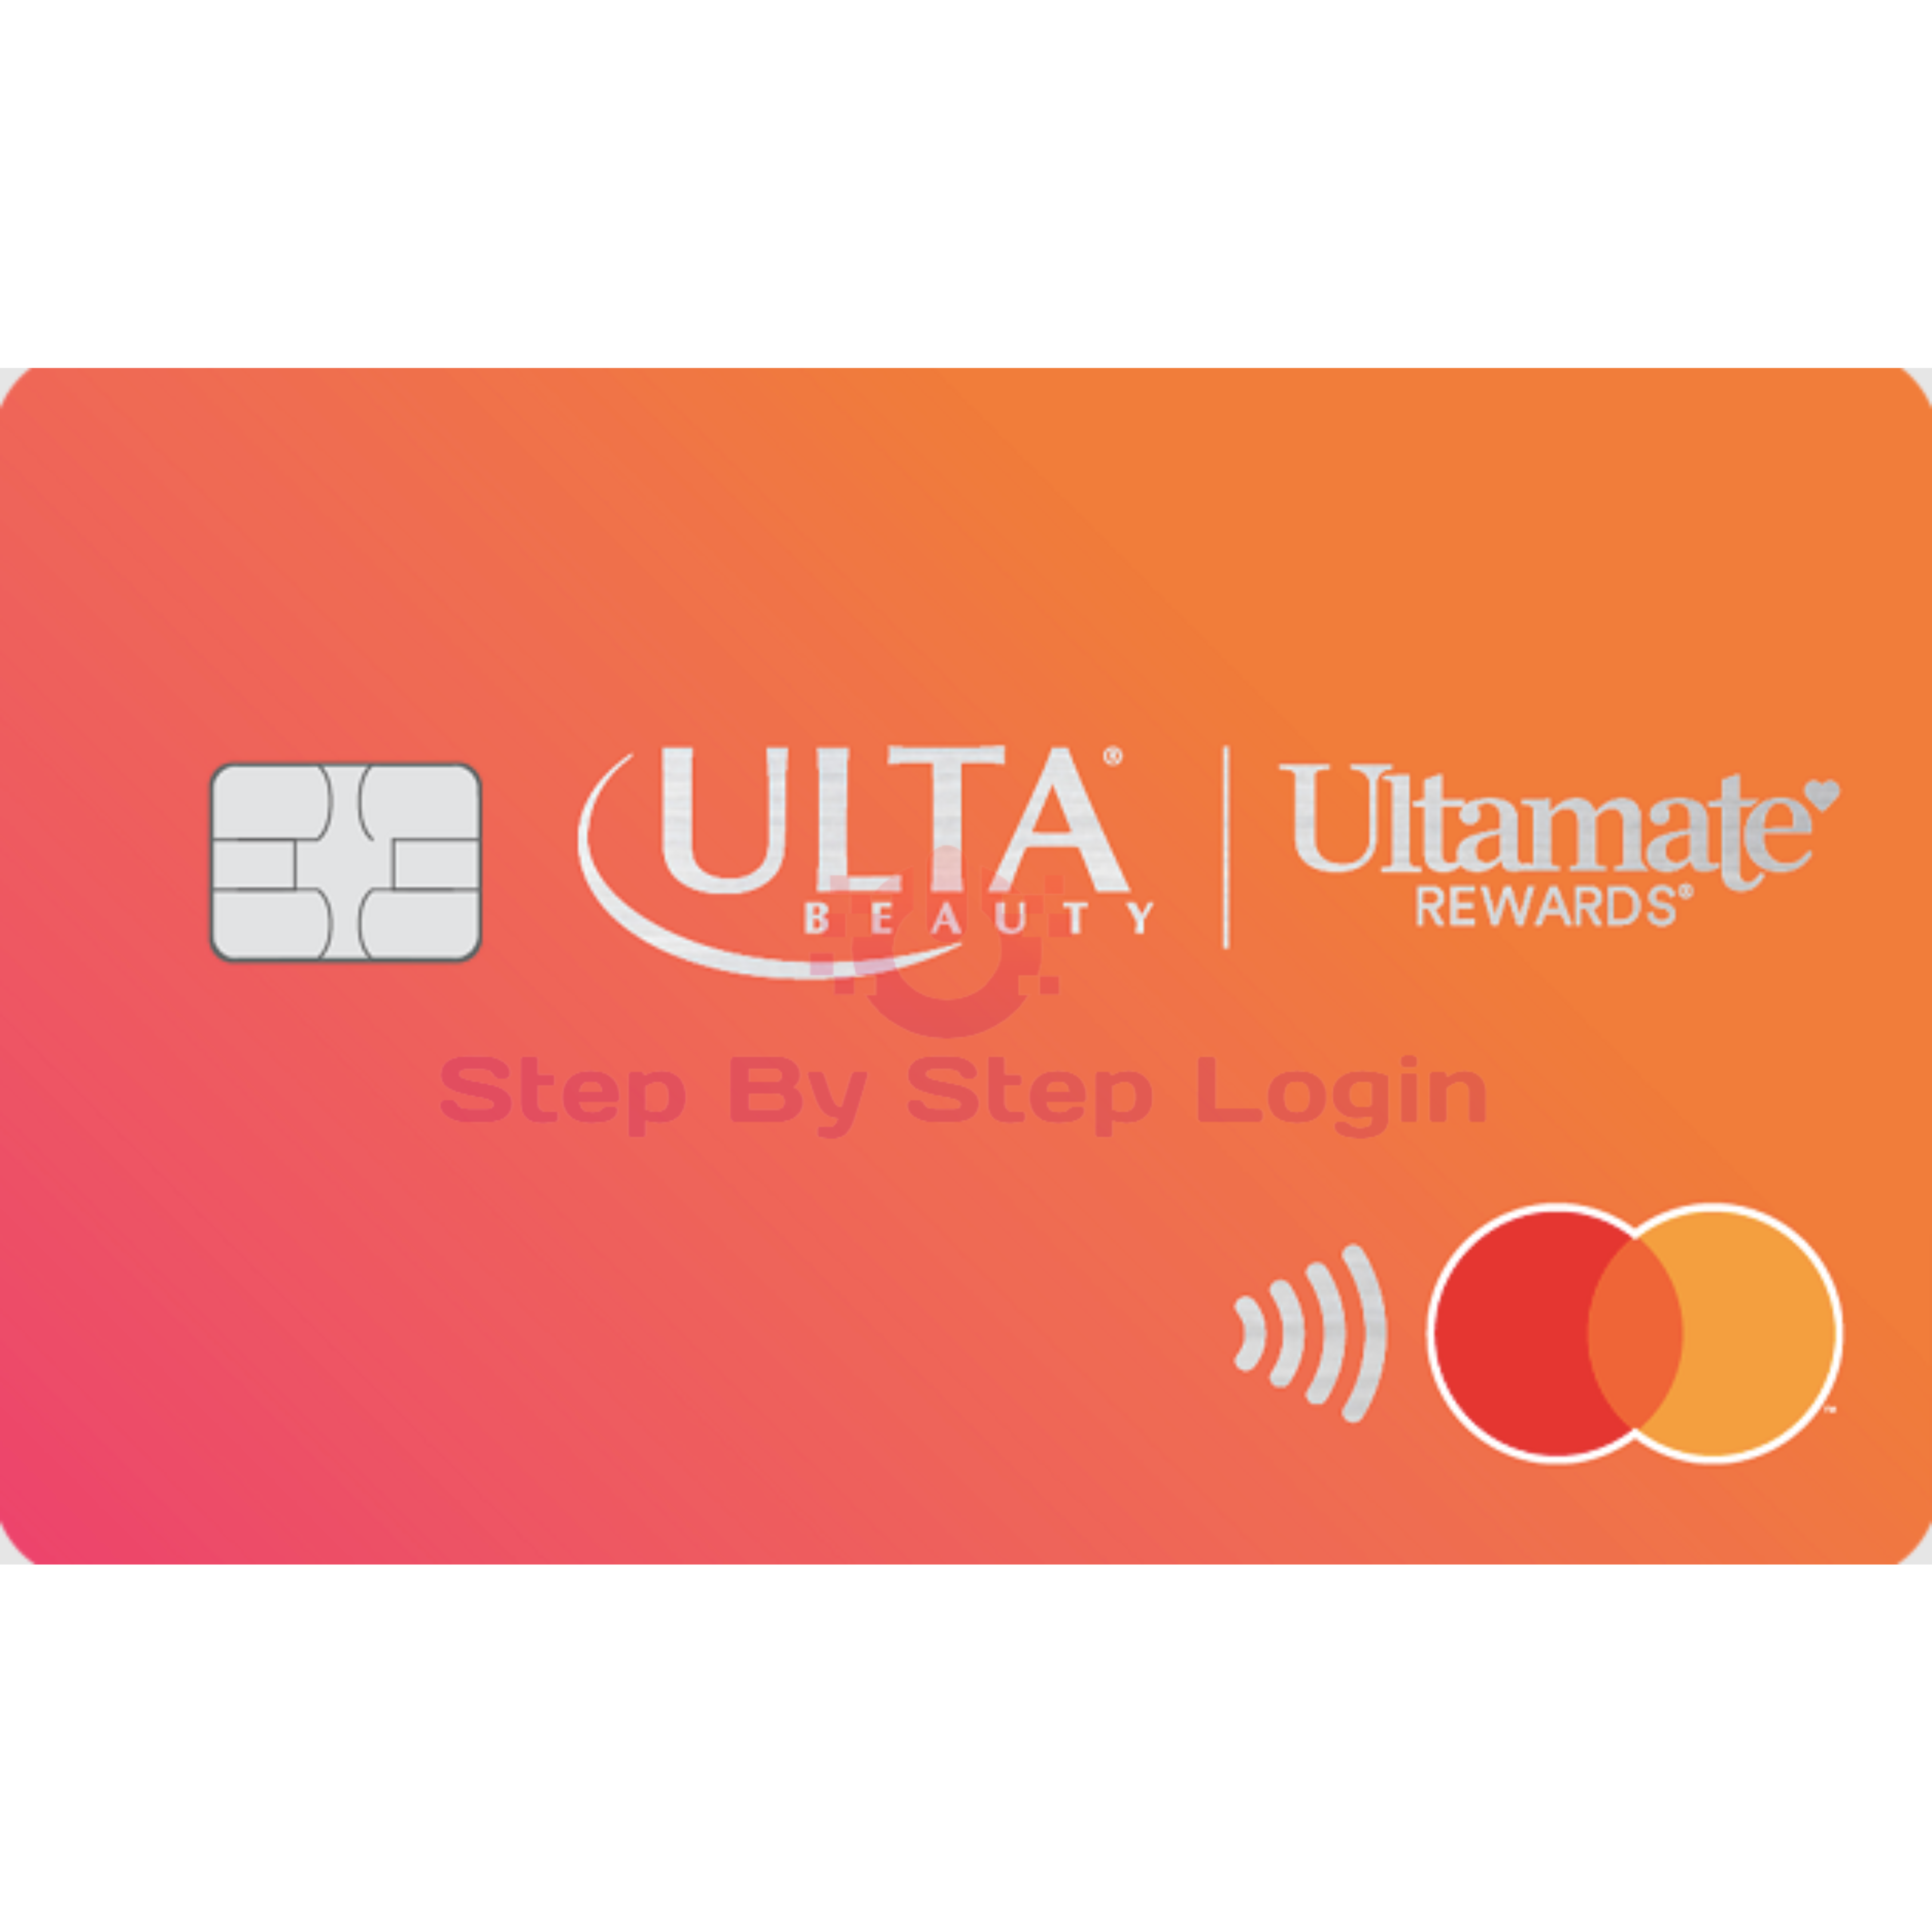 Ulta Credit Card